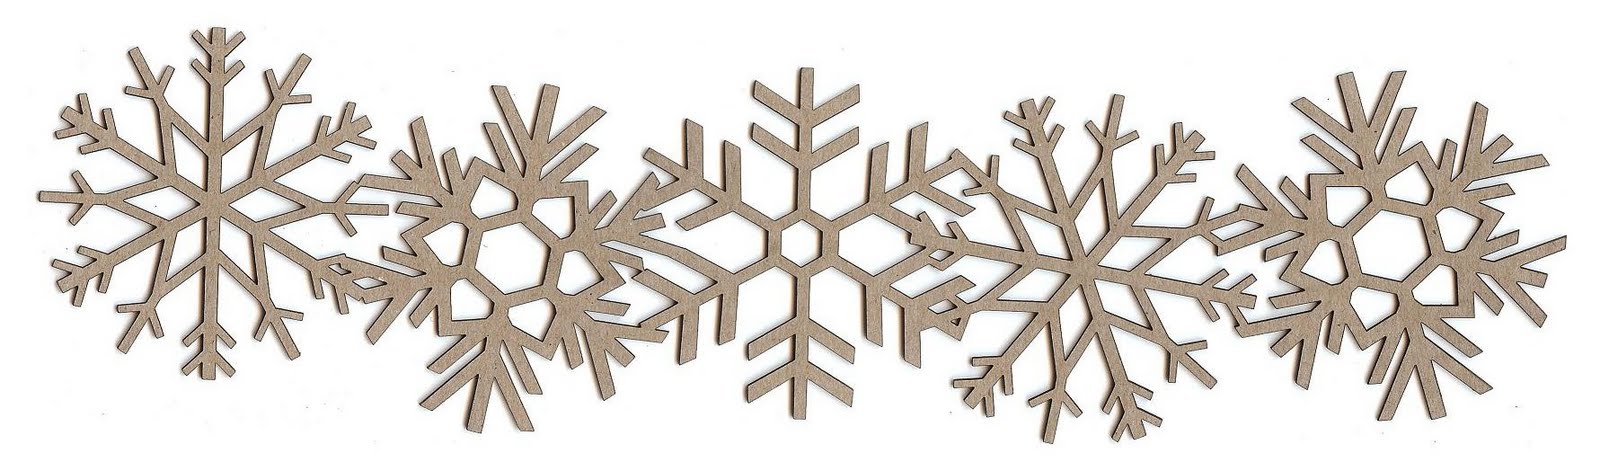 microsoft clip art snowflake - photo #50